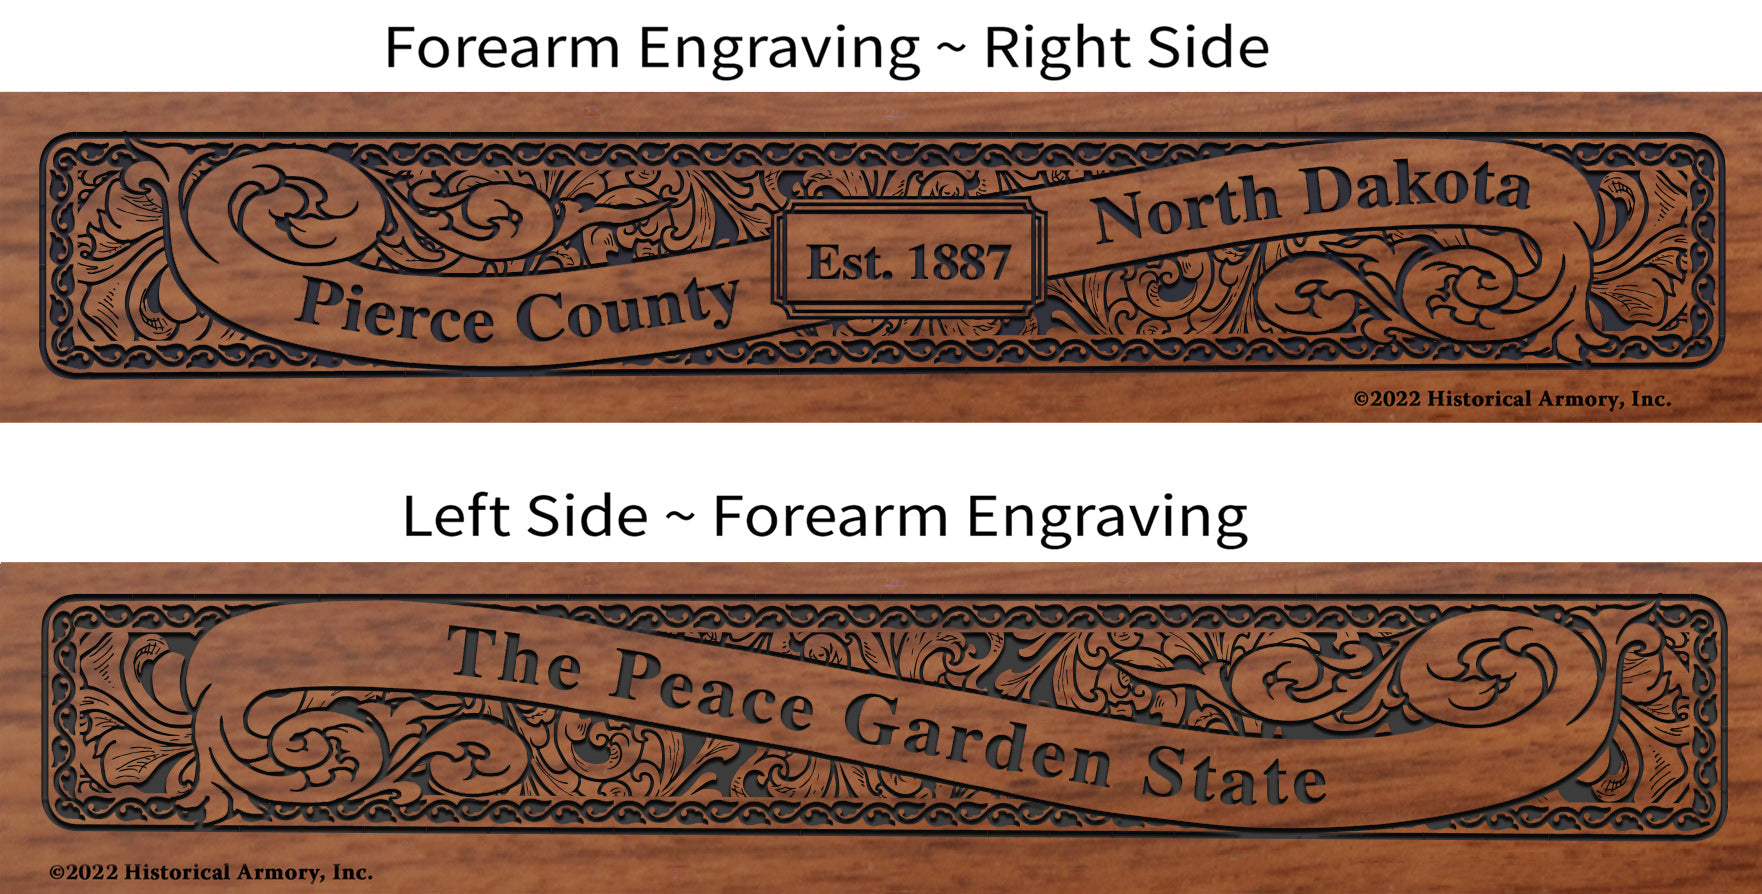 Pierce County North Dakota Engraved Rifle Forearm